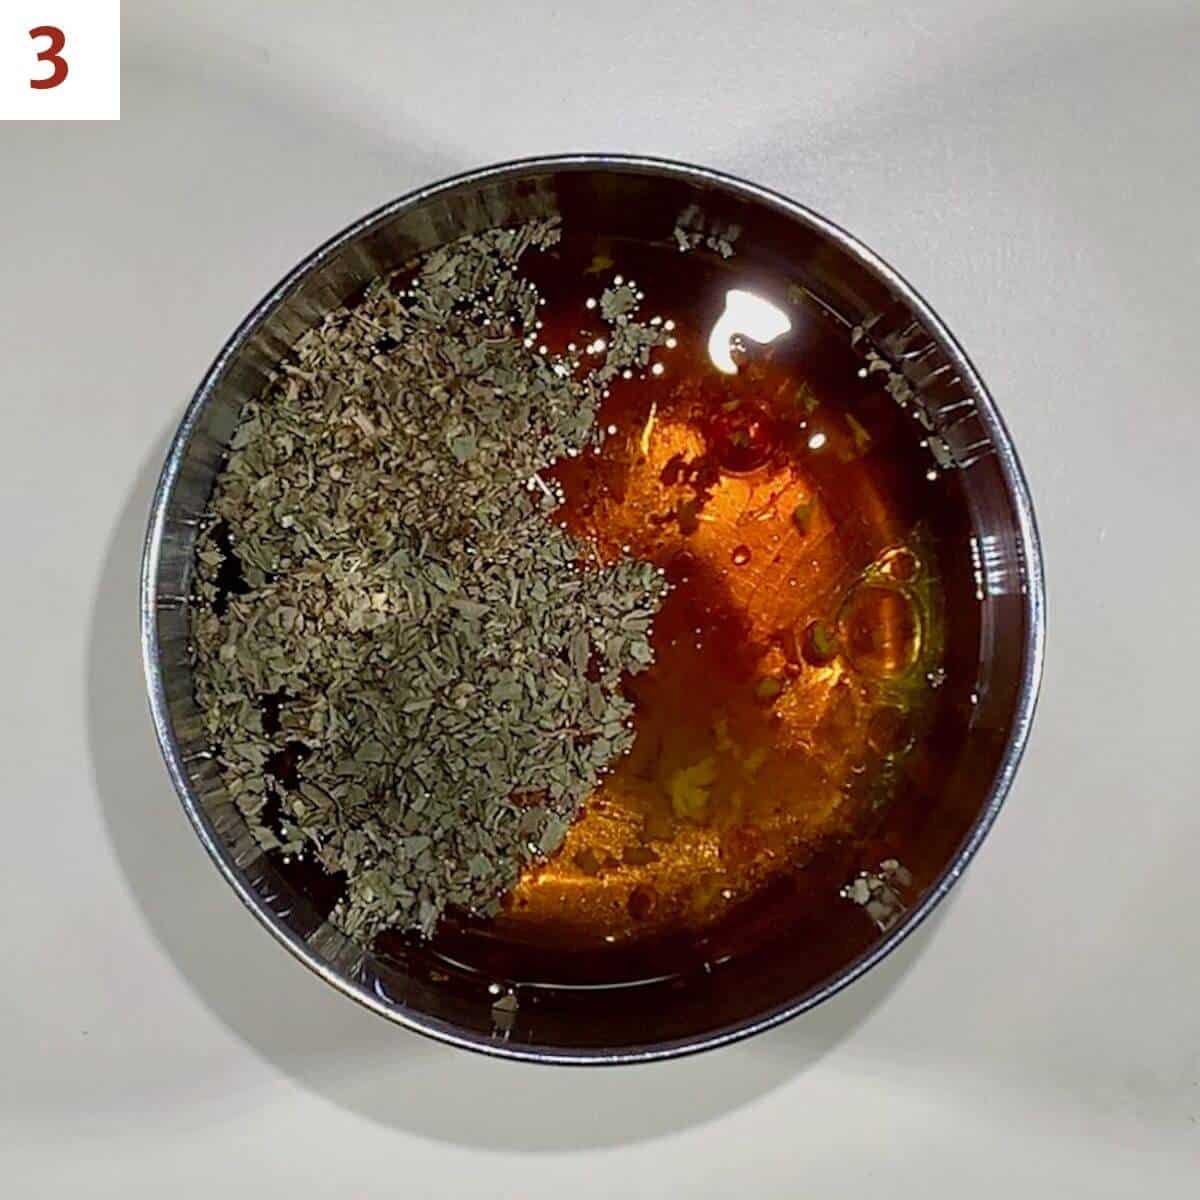 Adding oil to vinaigrette in a metal bowl.